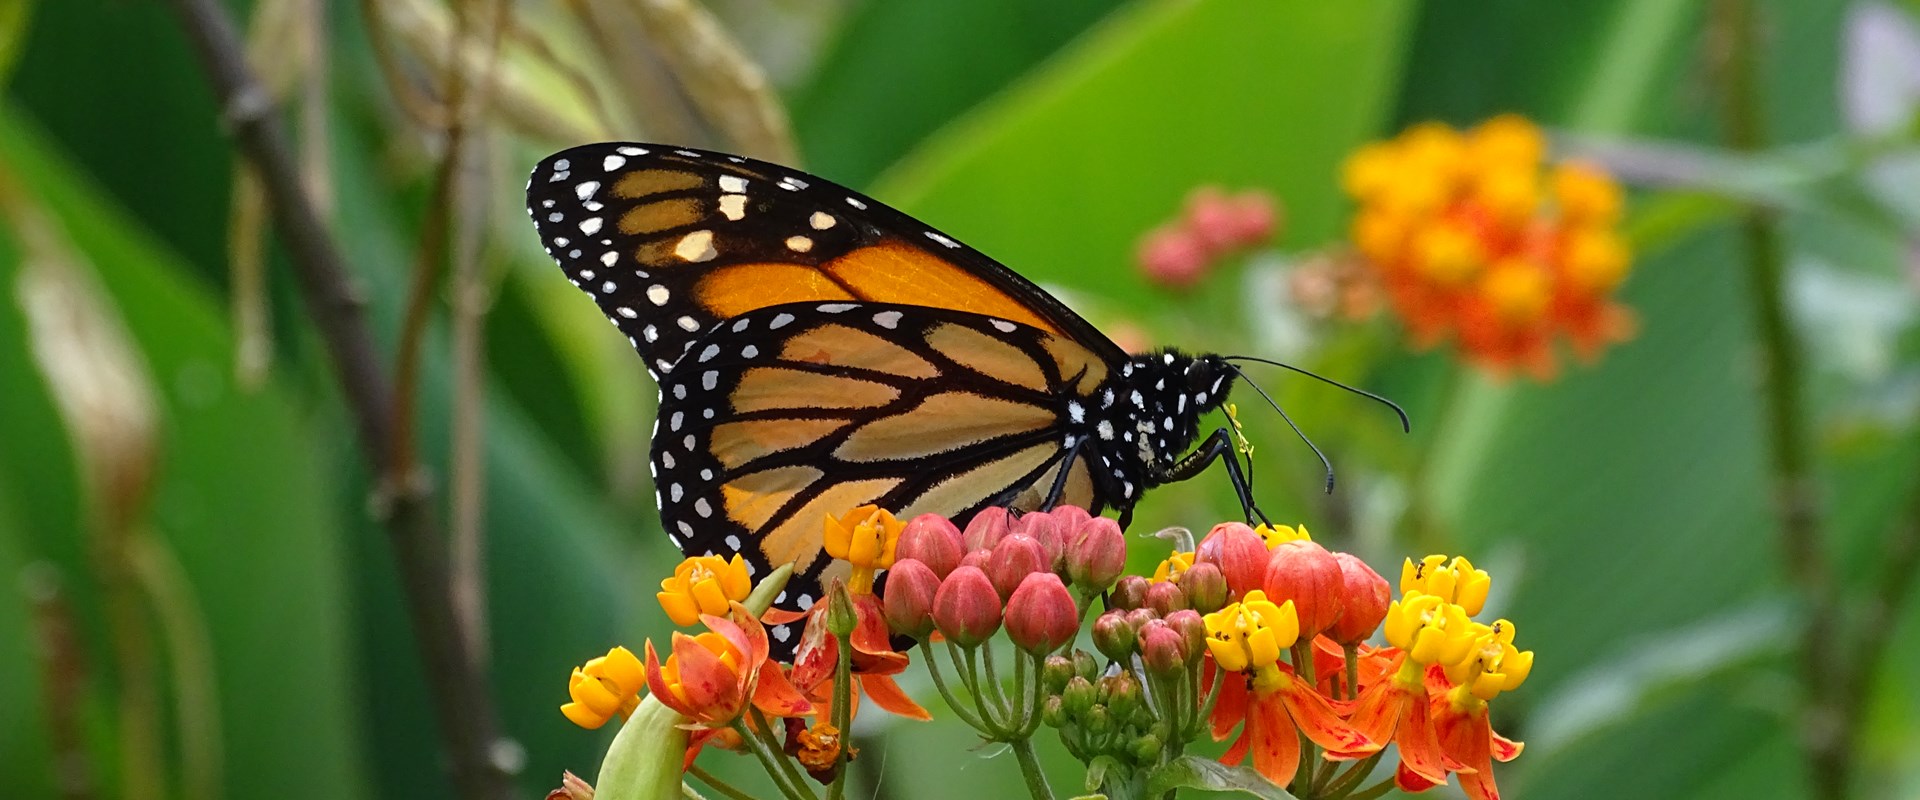 Monarch butterfly on a flower in Costa Rica.